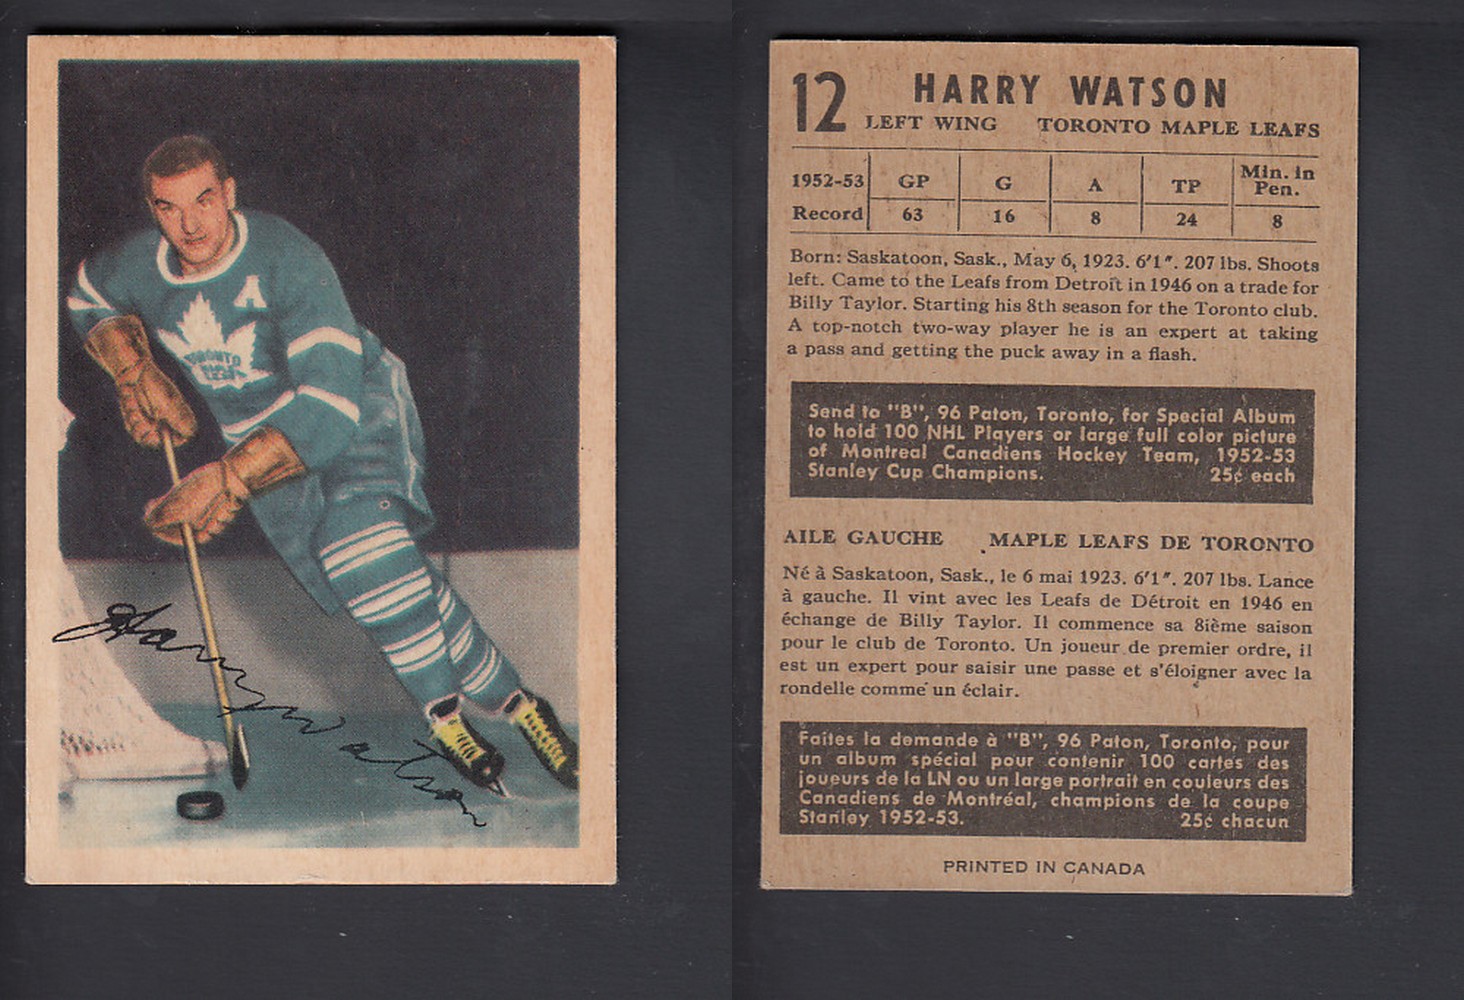 1953-54 PARKHURST HOCKEY CARD #12 H. WATSON photo